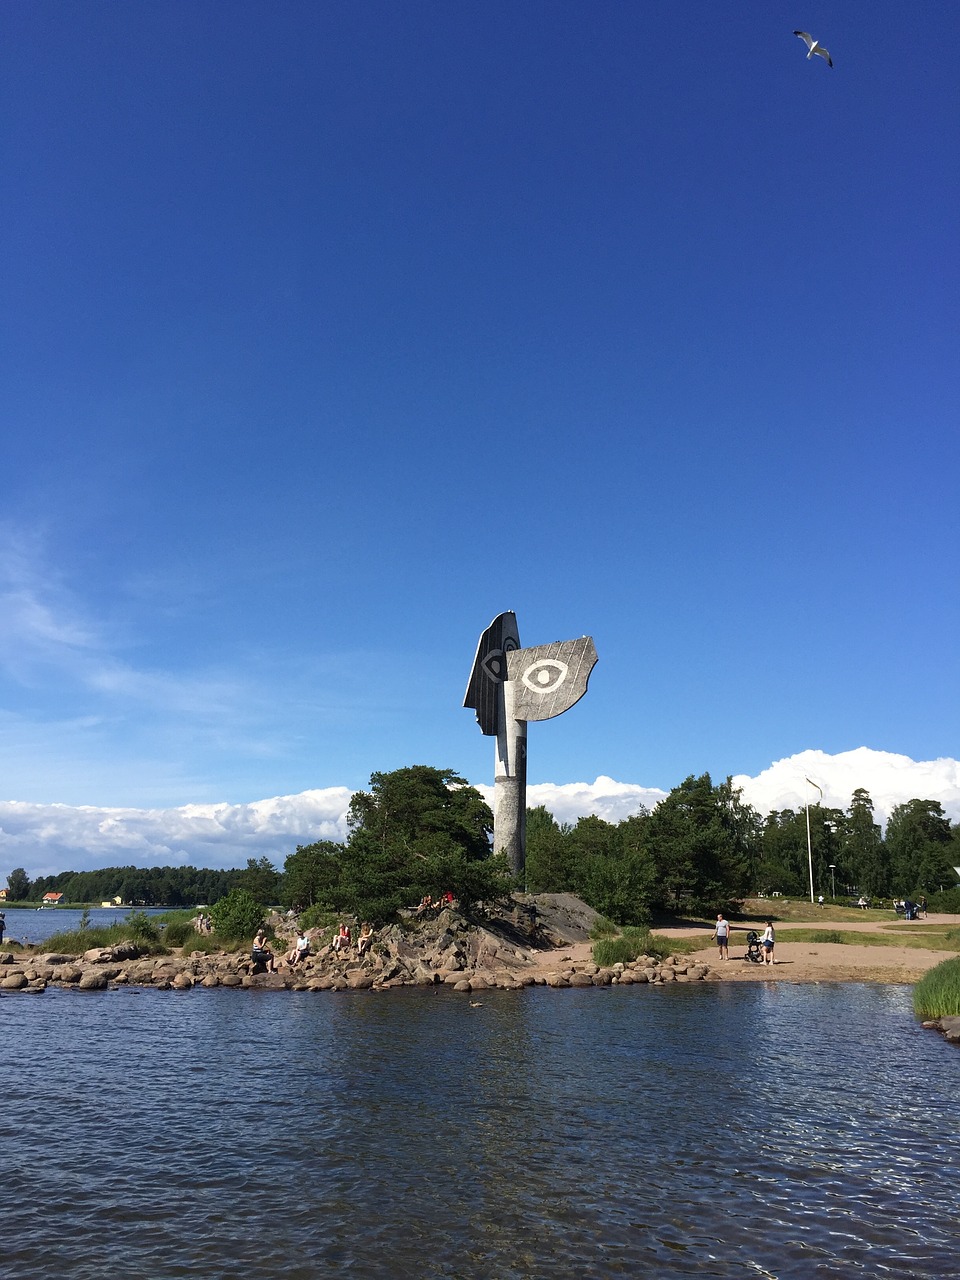 kristinehamn picasso sculpture sweden free photo